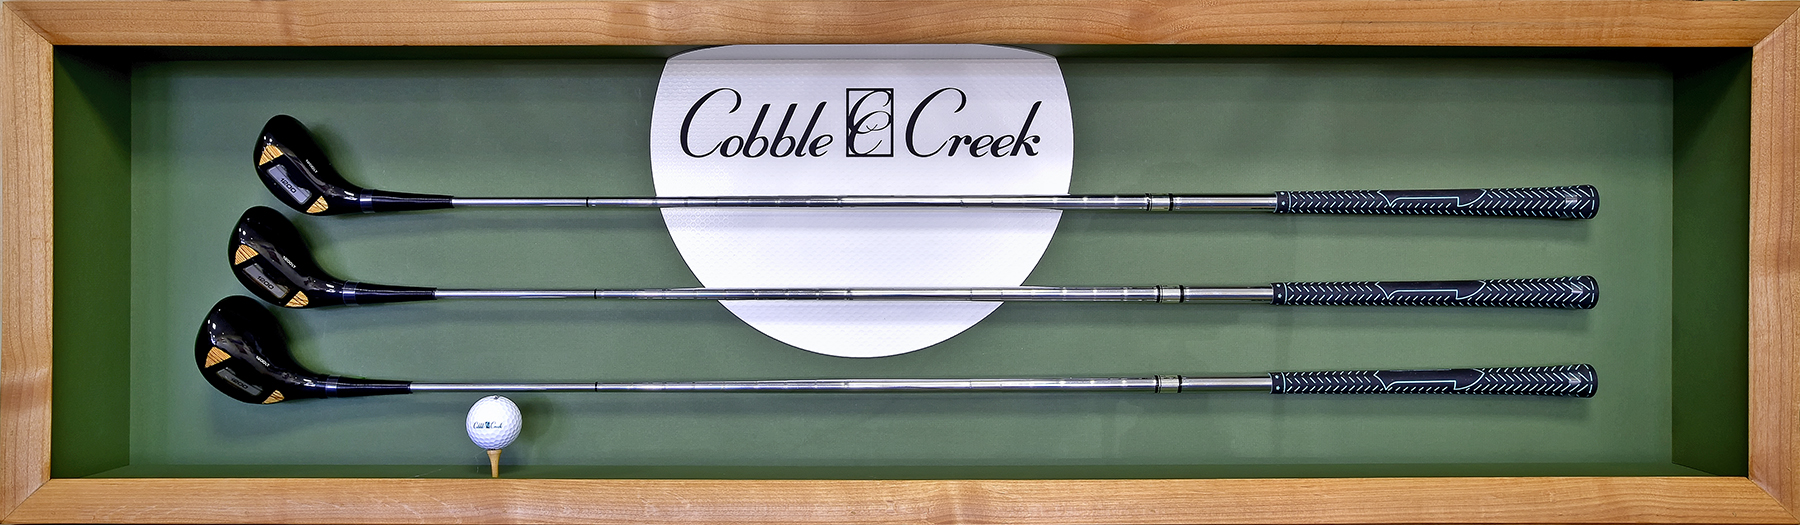 Cobble Creek Golf Clubs-flat.jpg